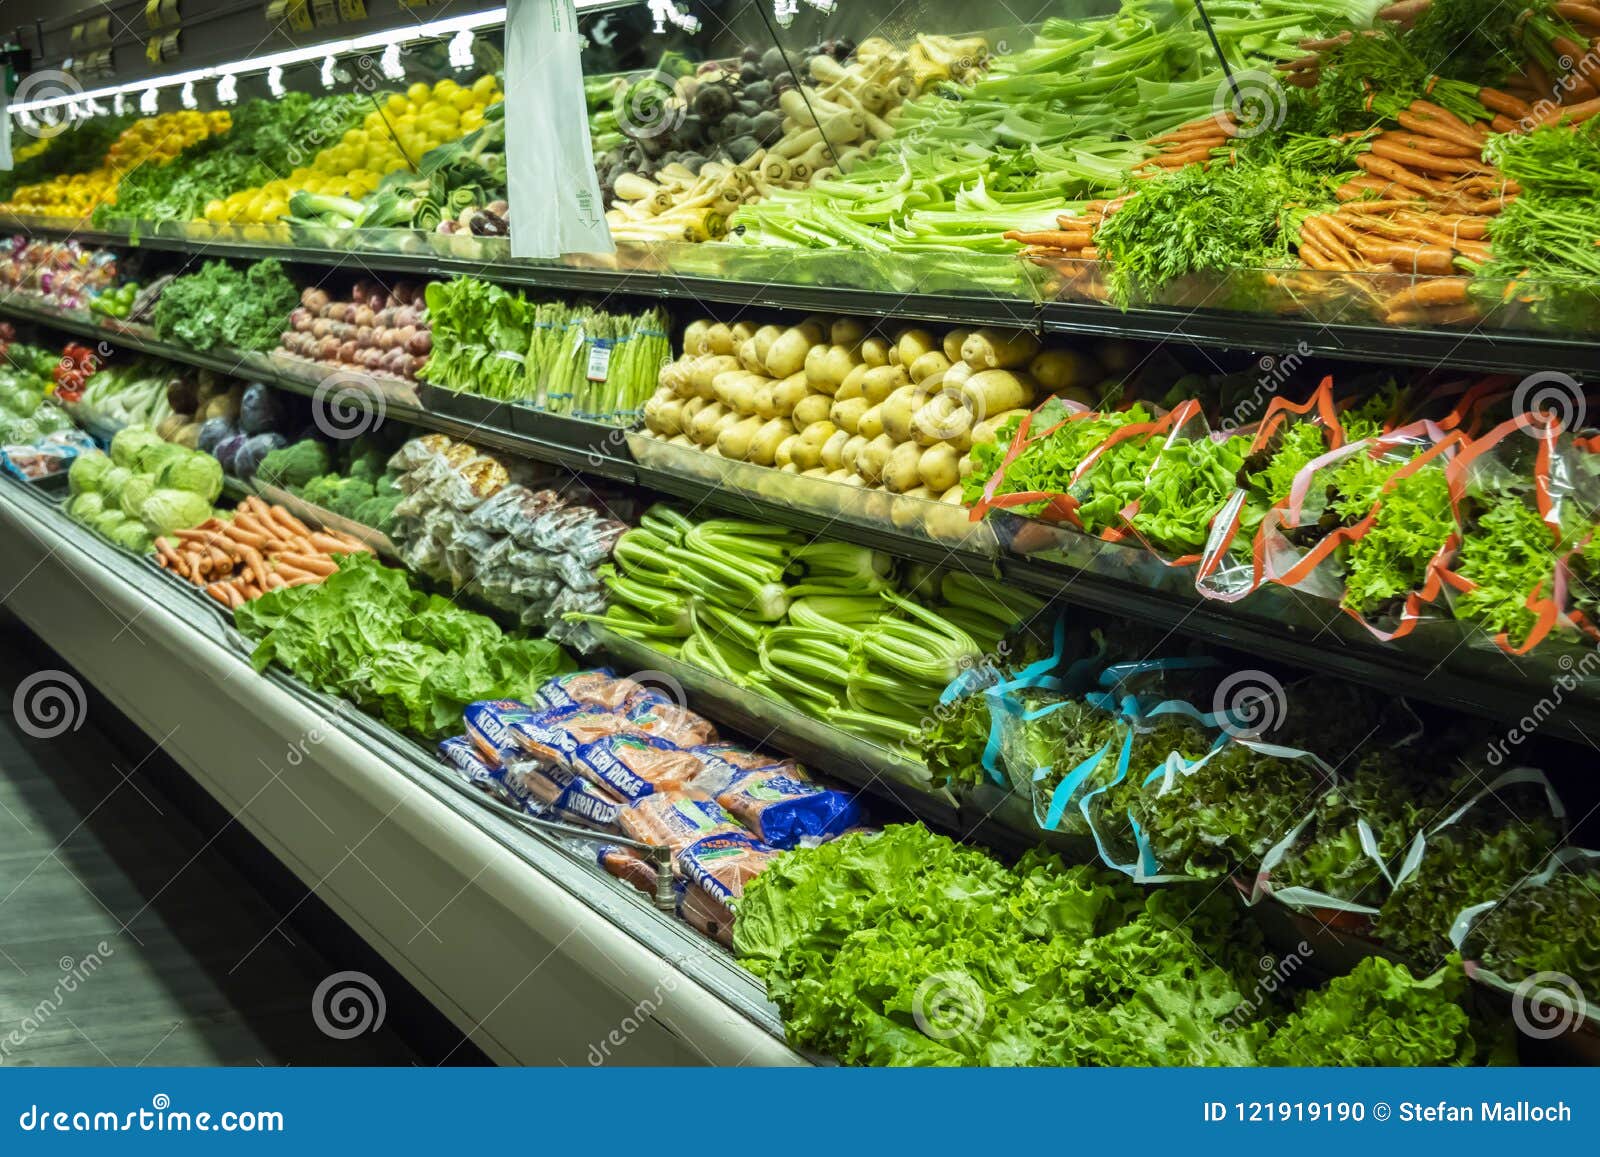 https://thumbs.dreamstime.com/z/lots-vegetables-produce-aisle-supermarket-121919190.jpg